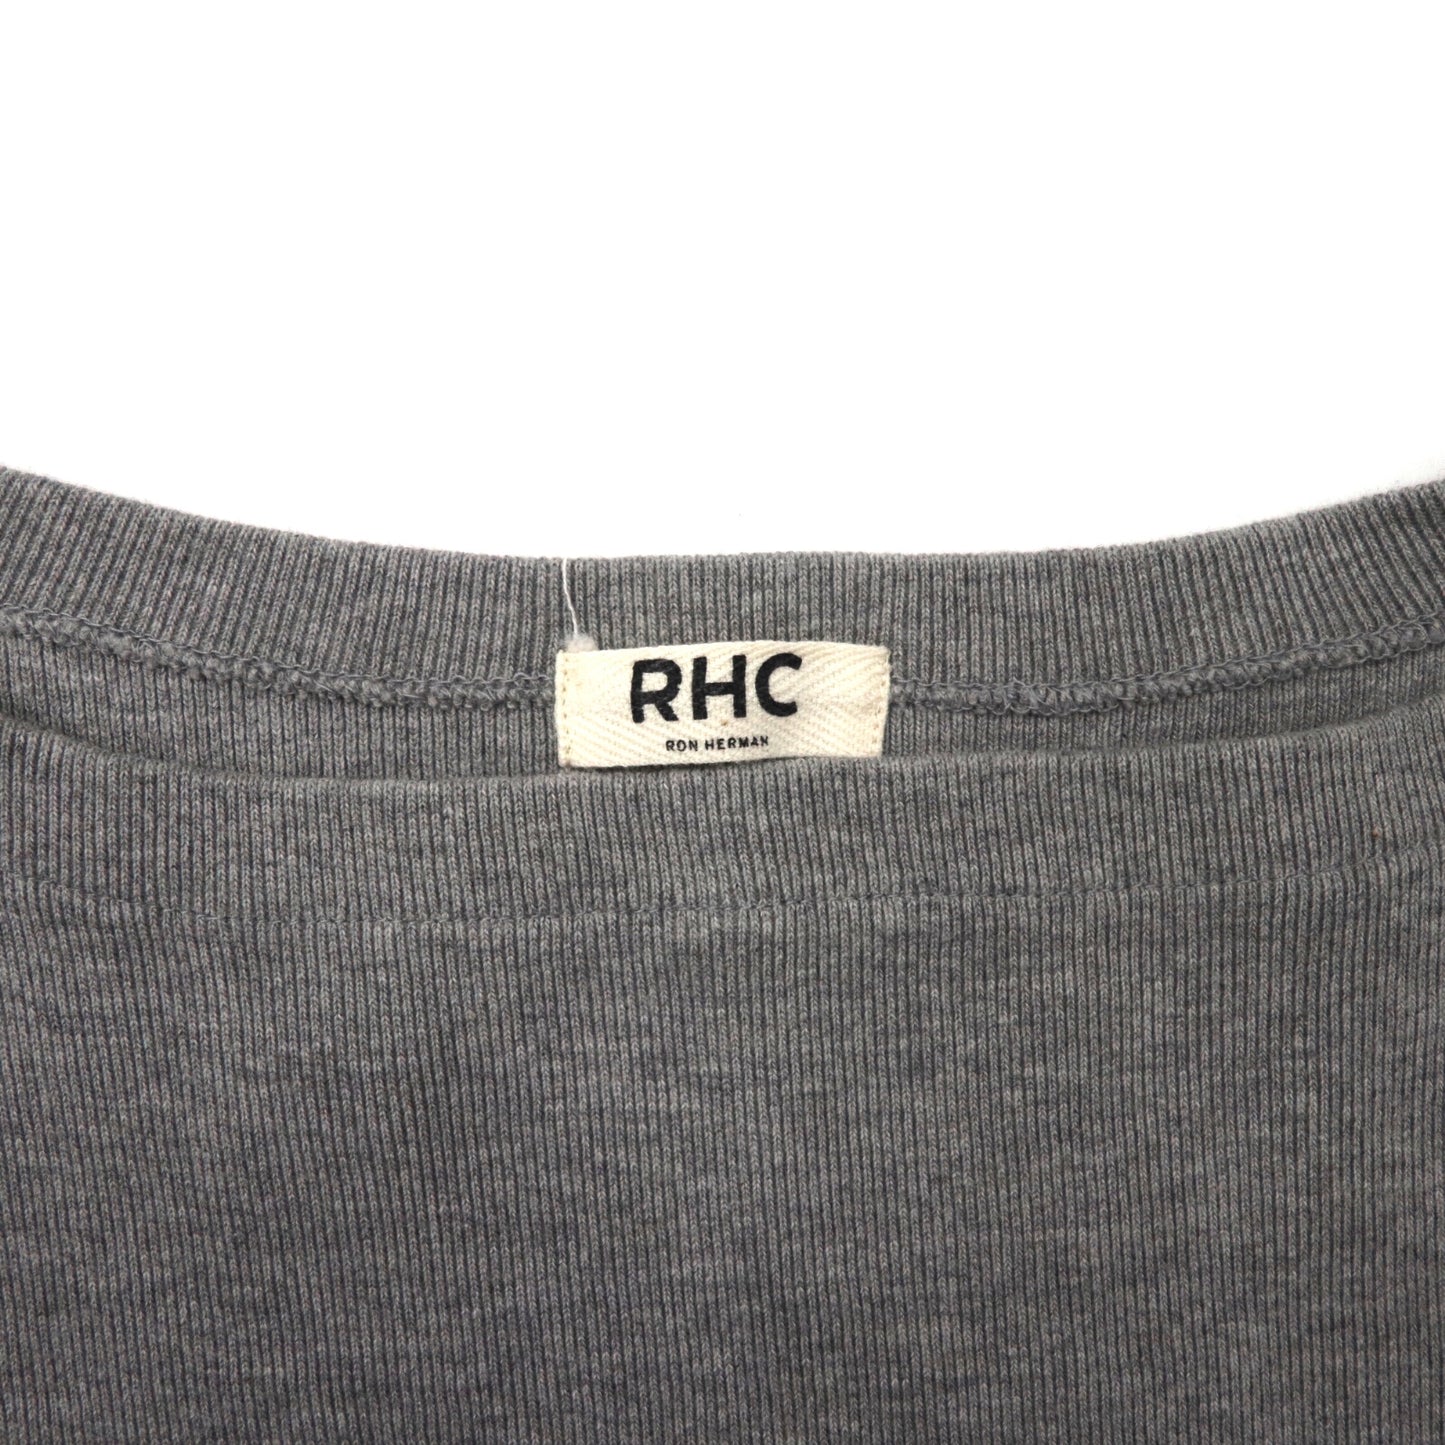 RHC ( RON HERMAN ) カットソー XS グレー ボートネック